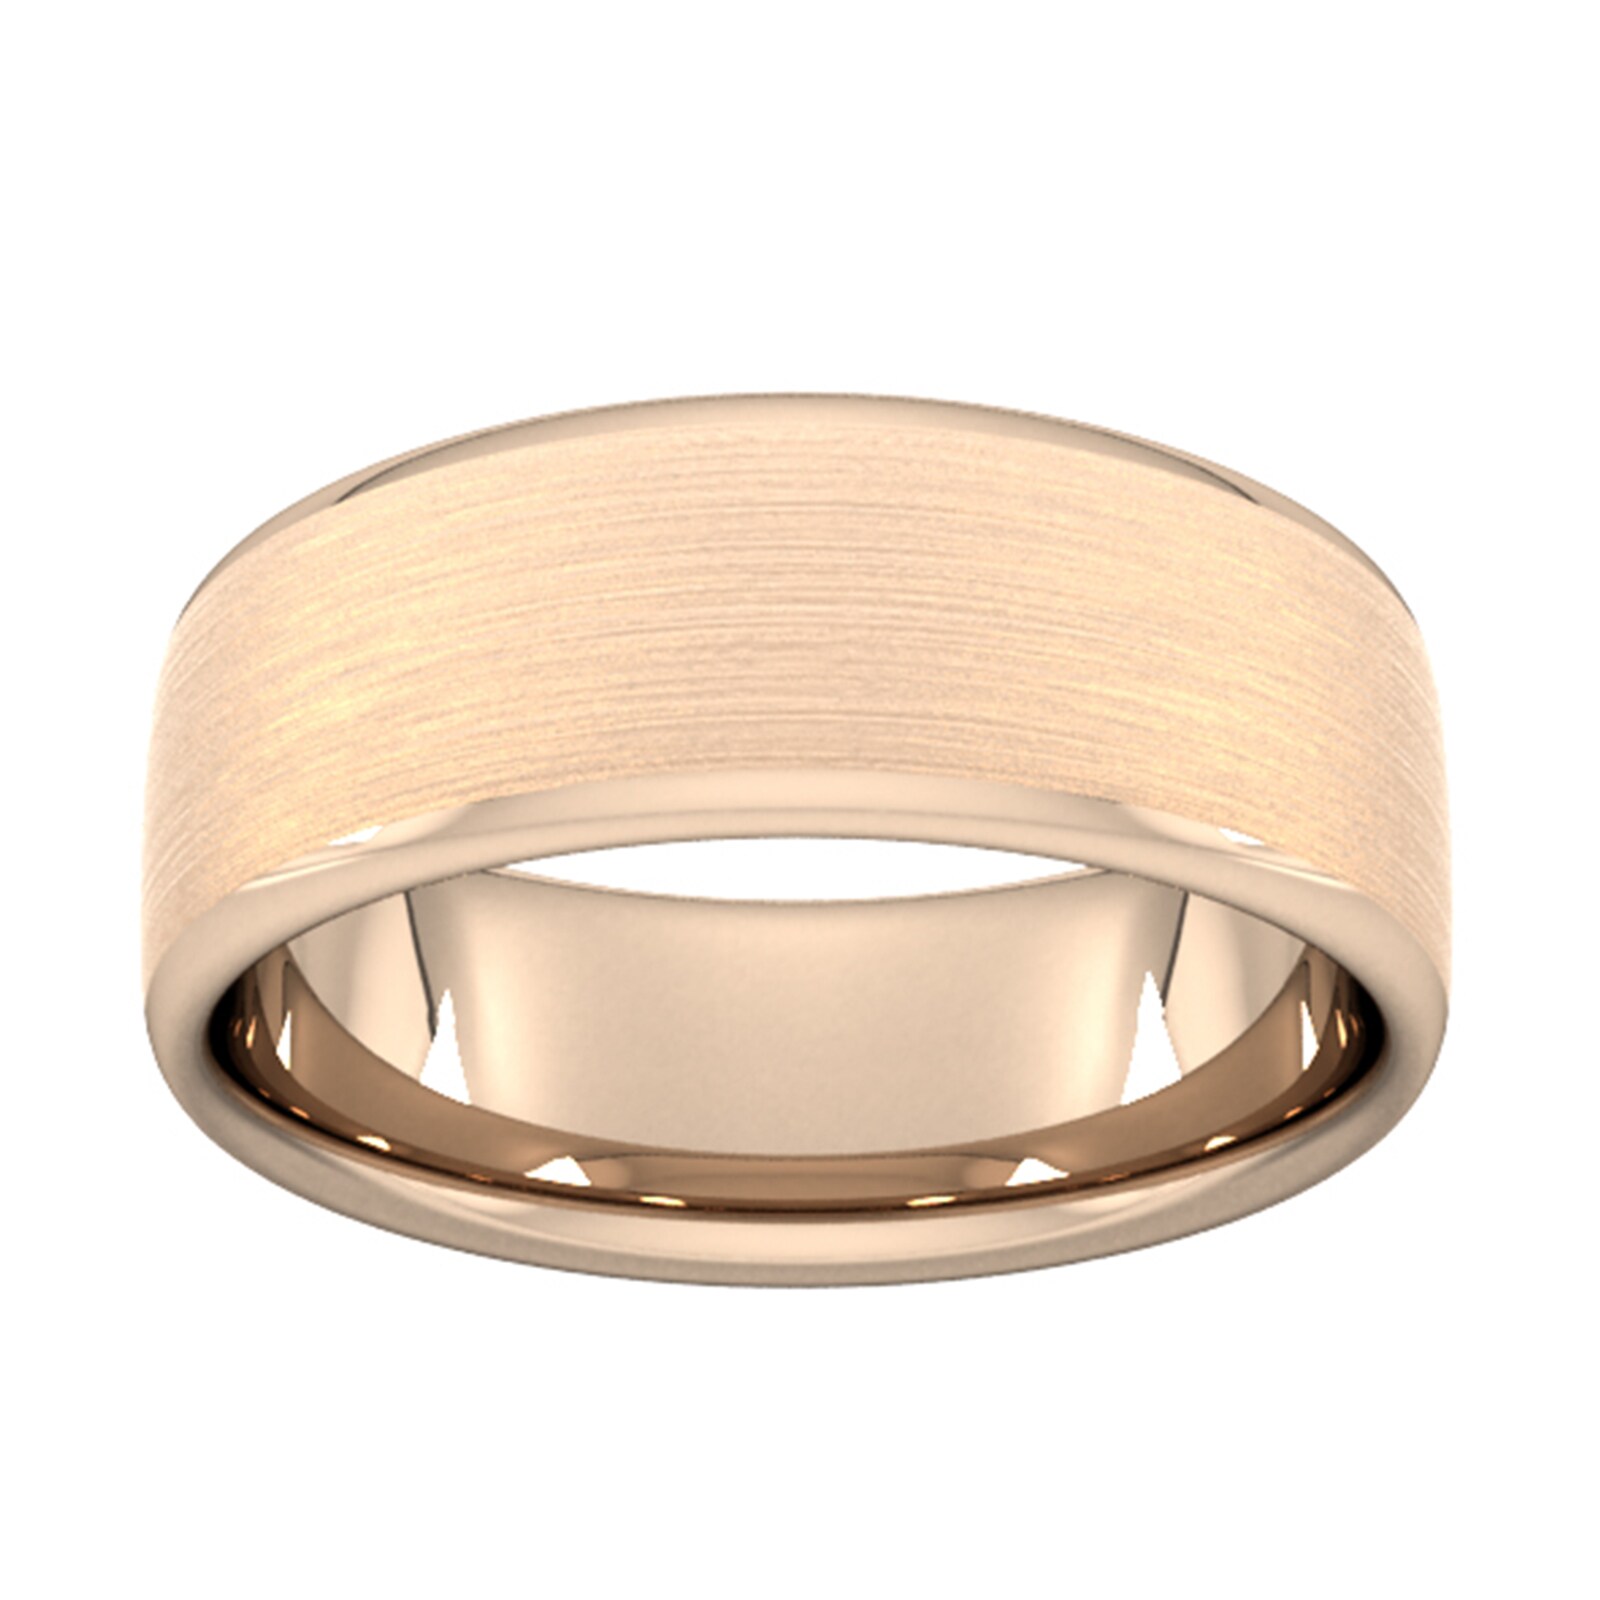 8mm Slight Court Extra Heavy Matt Finished Wedding Ring In 9 Carat Rose Gold - Ring Size G